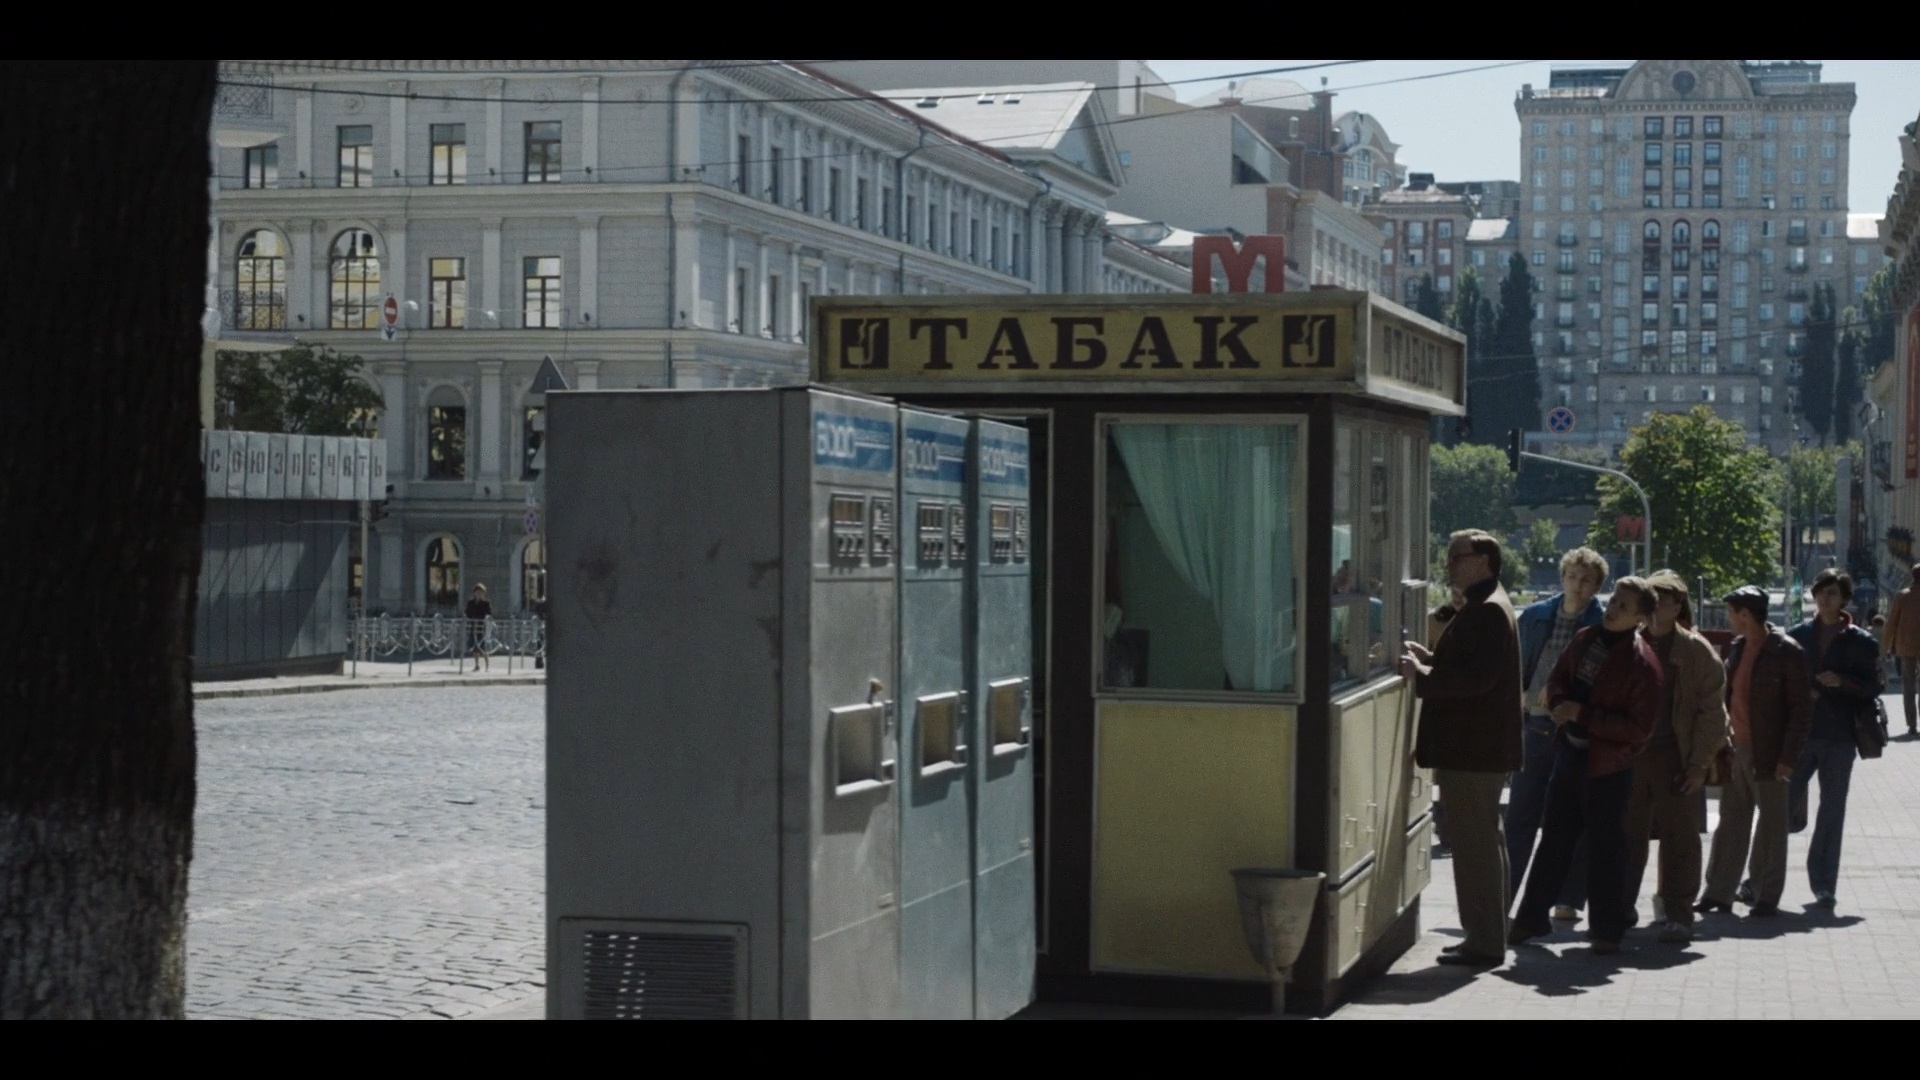 Saturators in HBO series "Chernobyl"